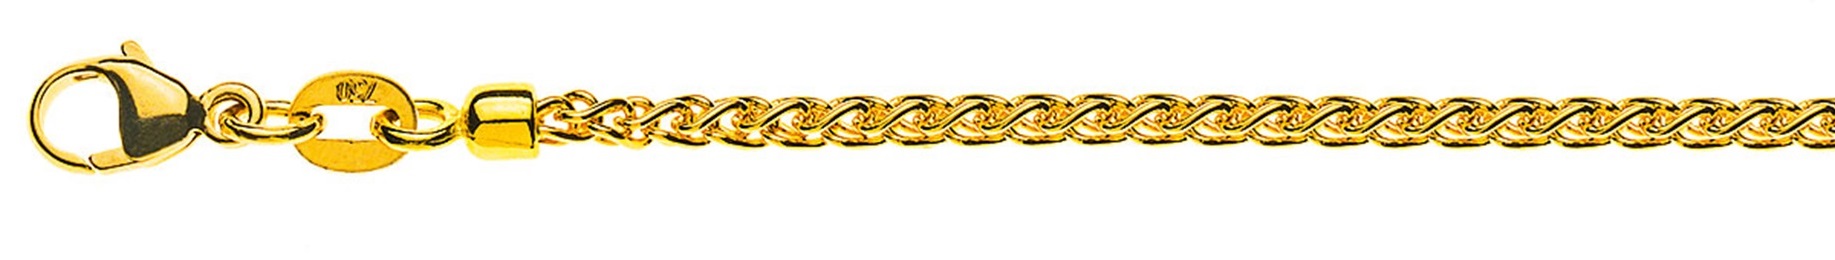 AURONOS Prestige Collier en or jaune 18K torsadé 55cm 2.15mm